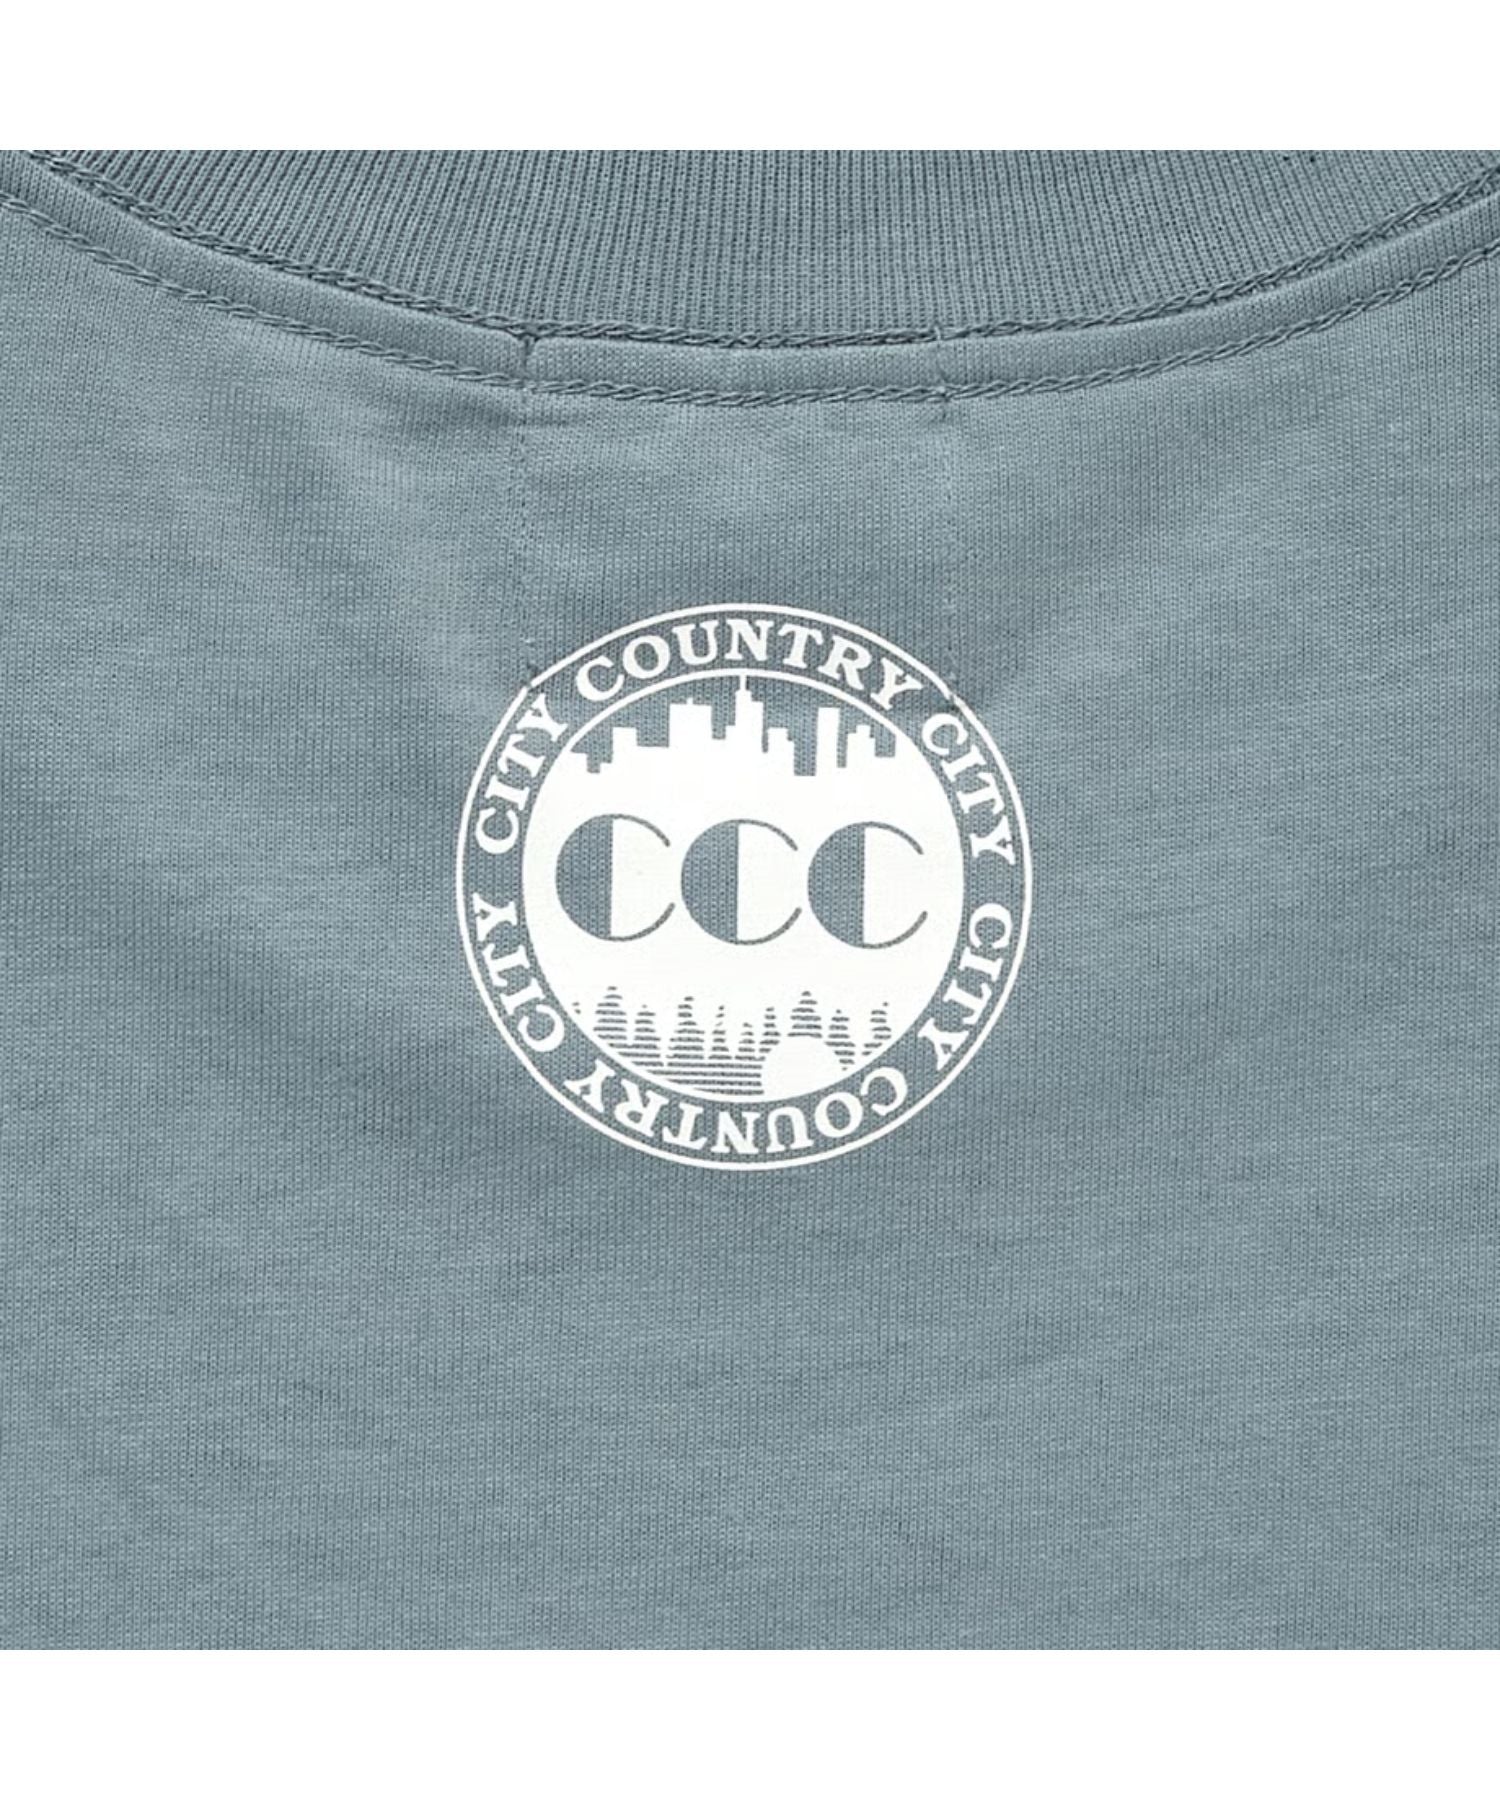 Cotton T-shirt_City Country City